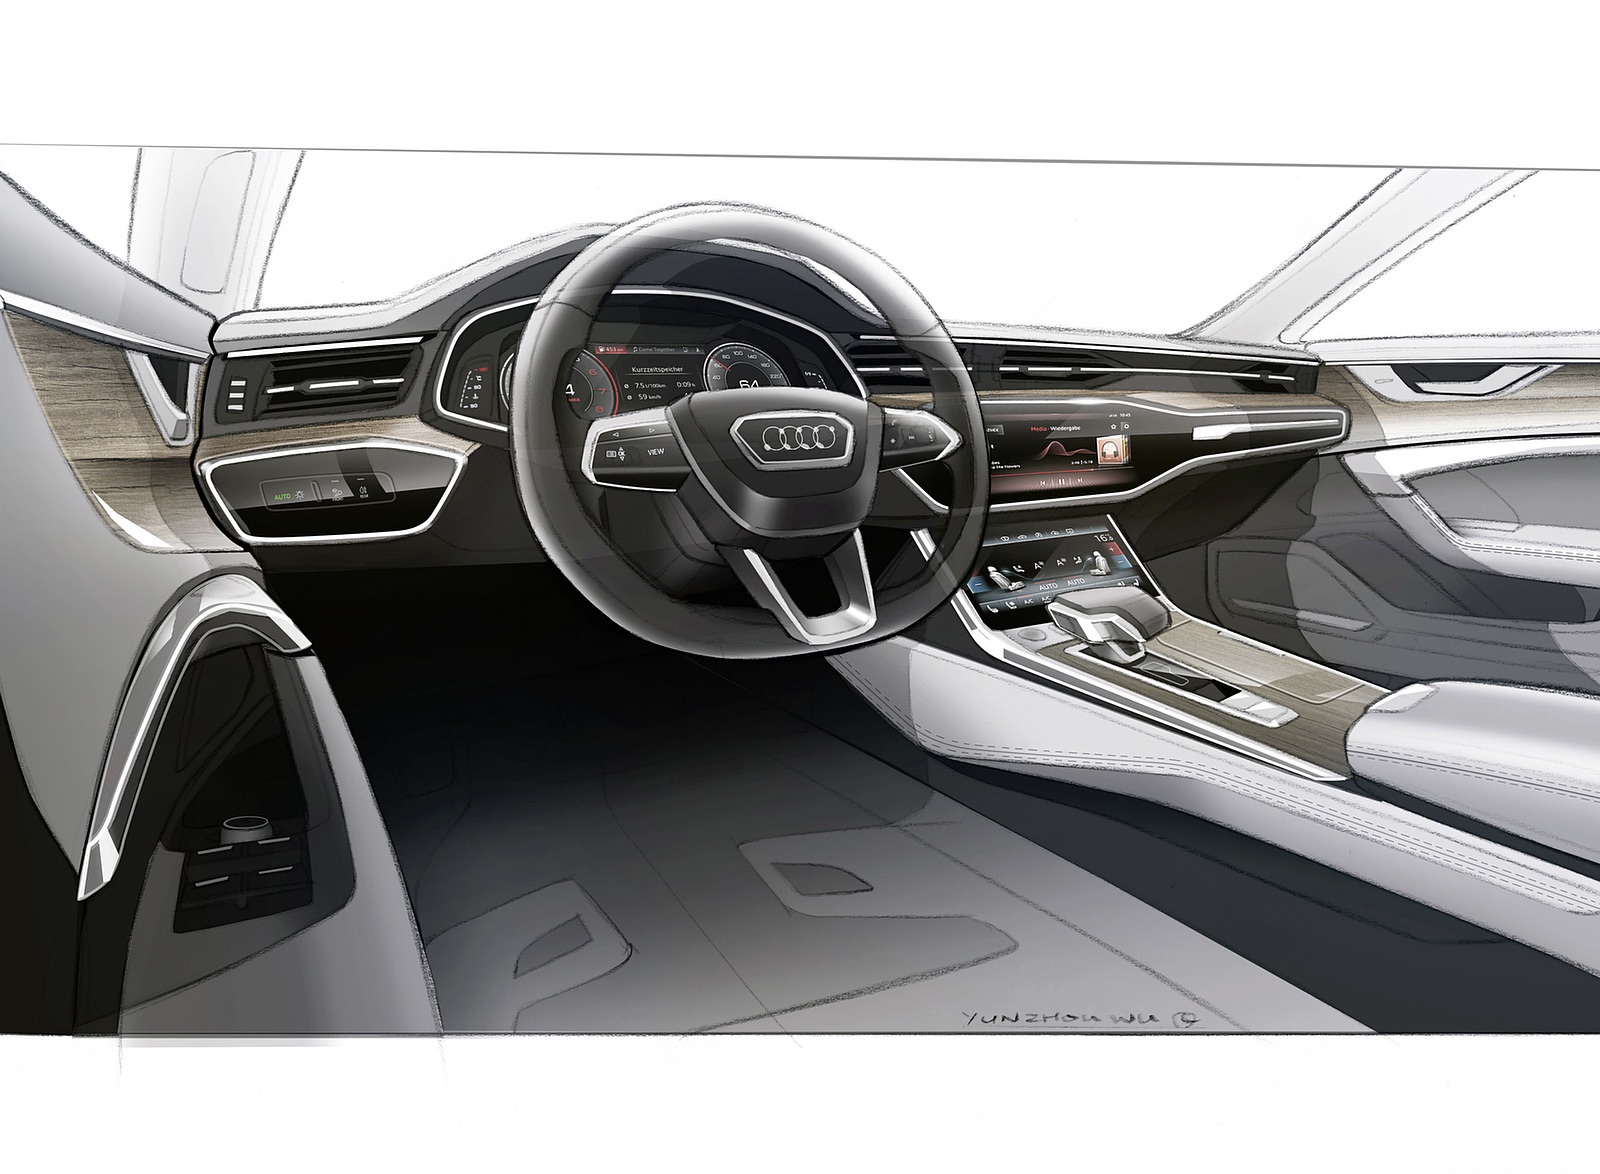 2019 Audi A7 Sportback Design Sketch Wallpapers #31 of 83